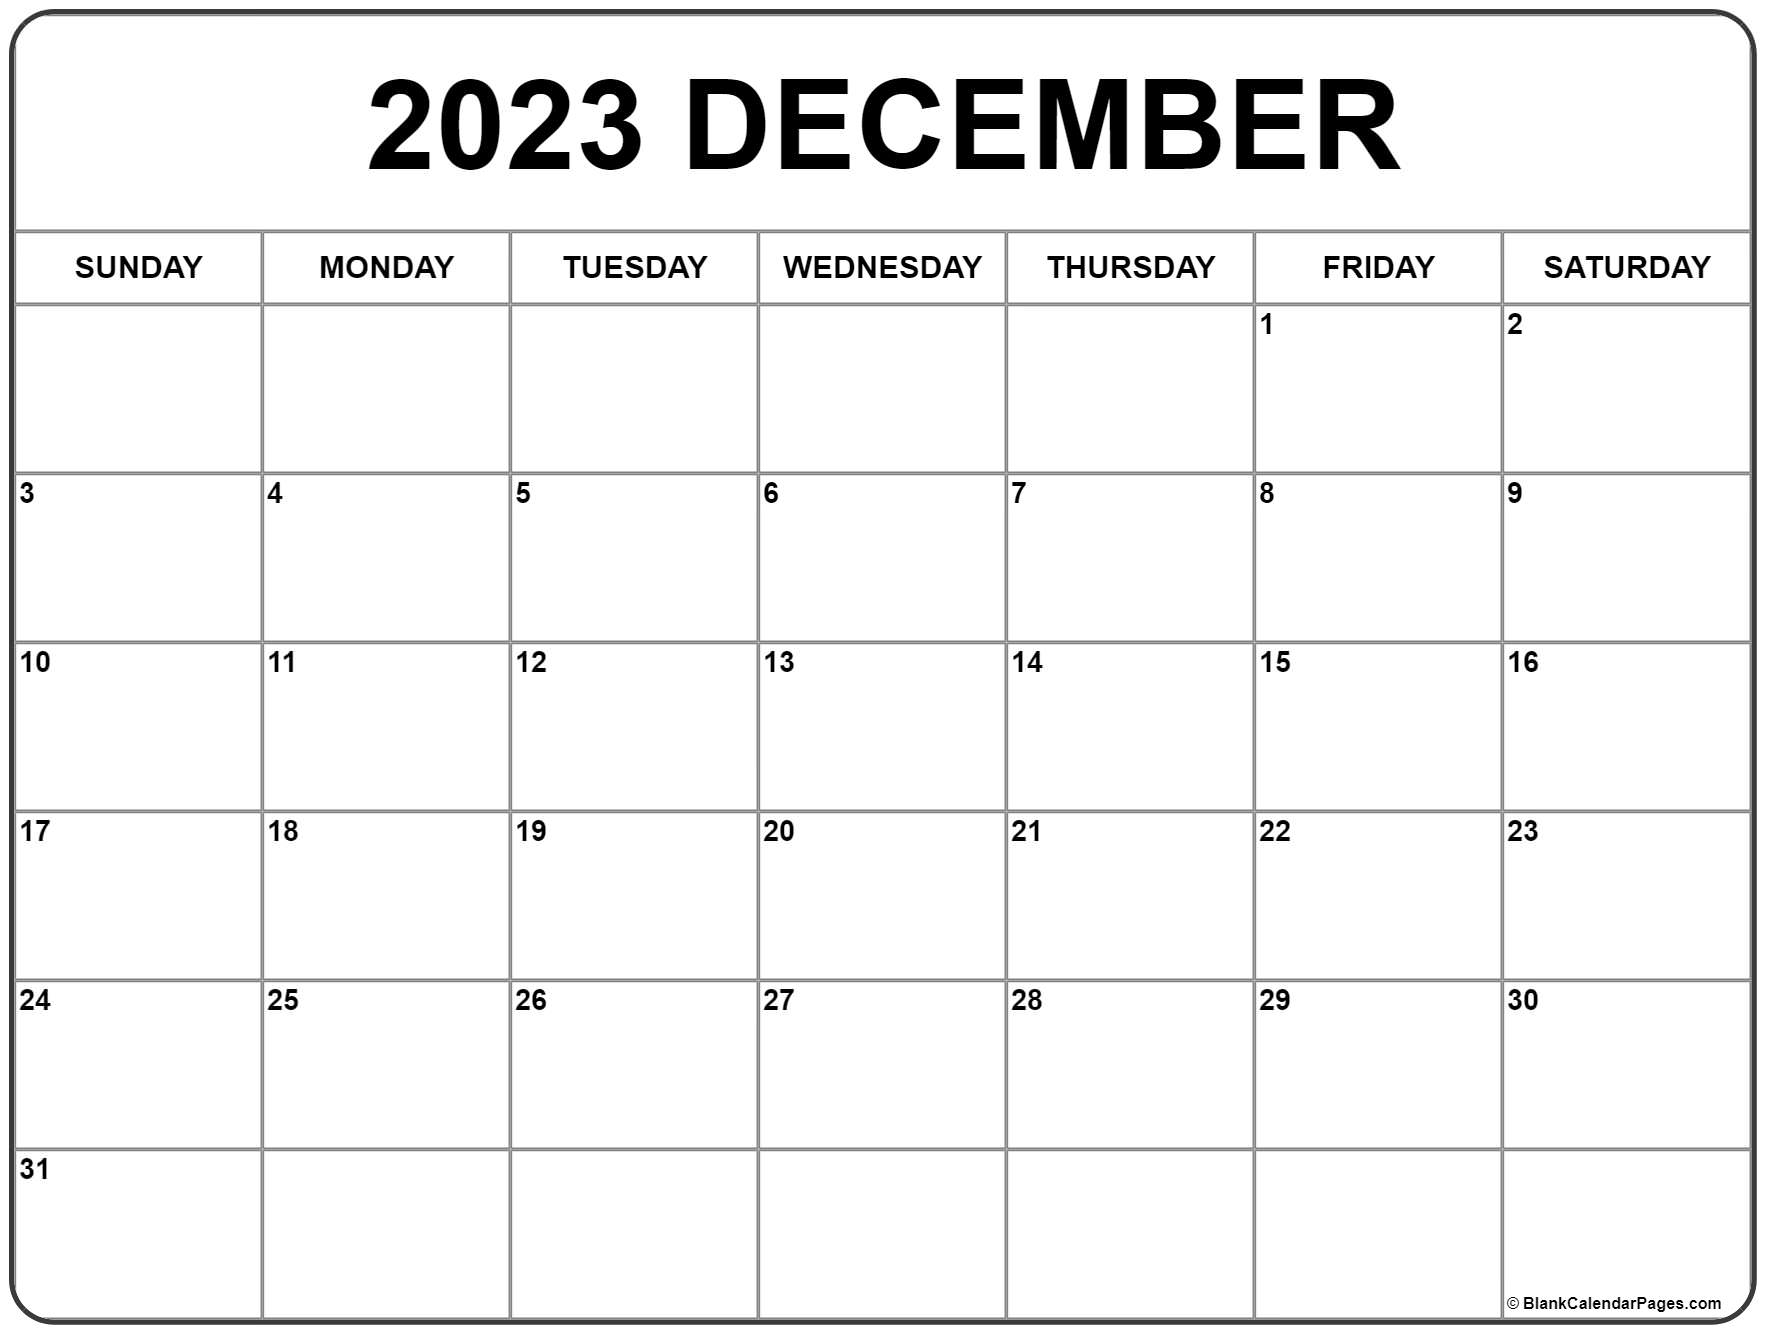 december-2023-calendar-download-get-latest-map-update